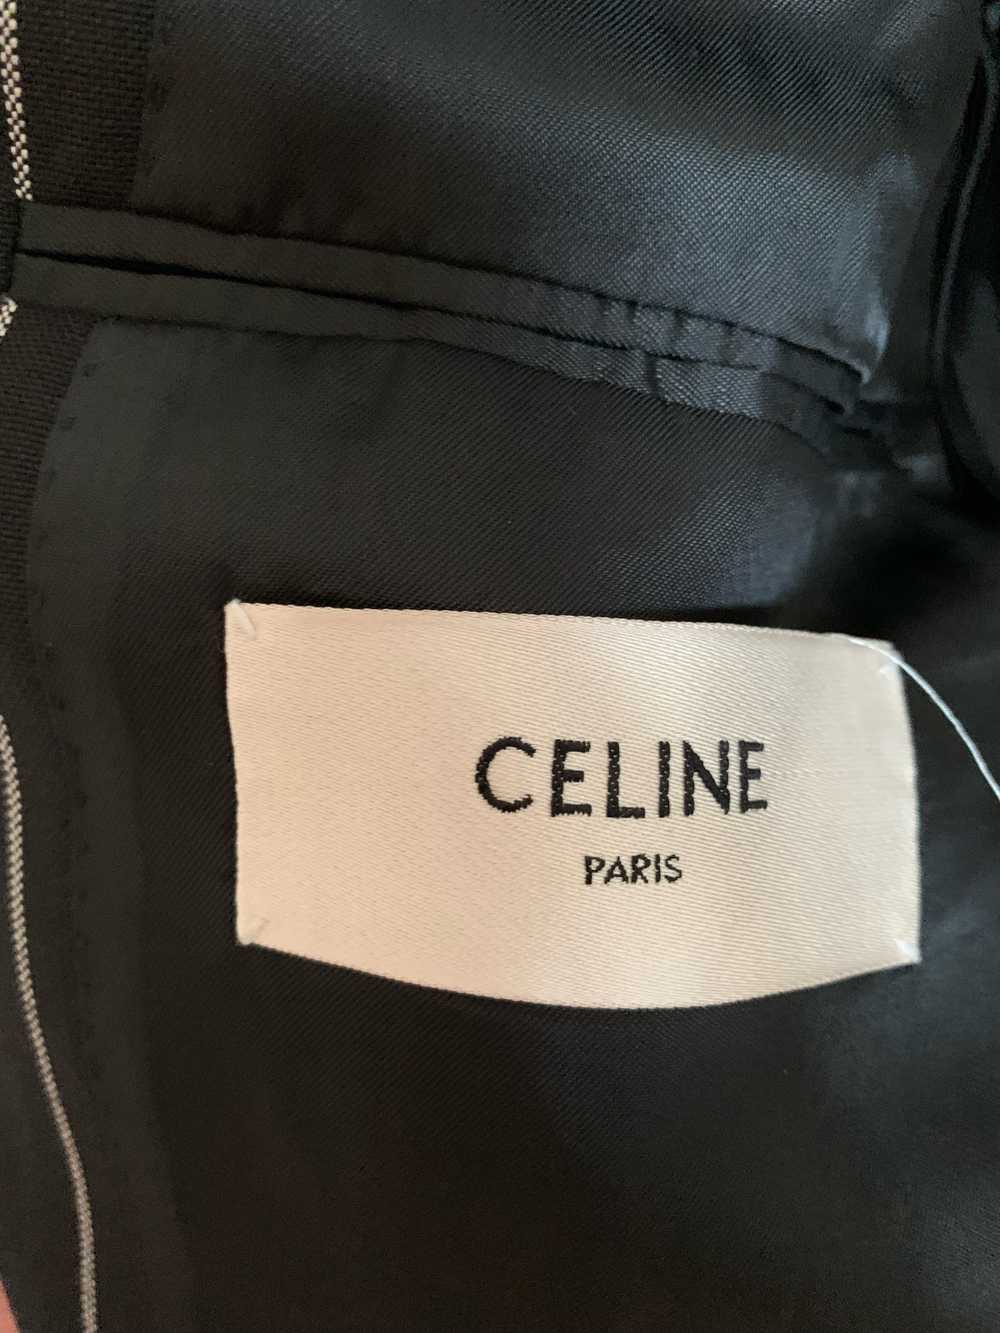 Celine Pinstripe Suit - image 4